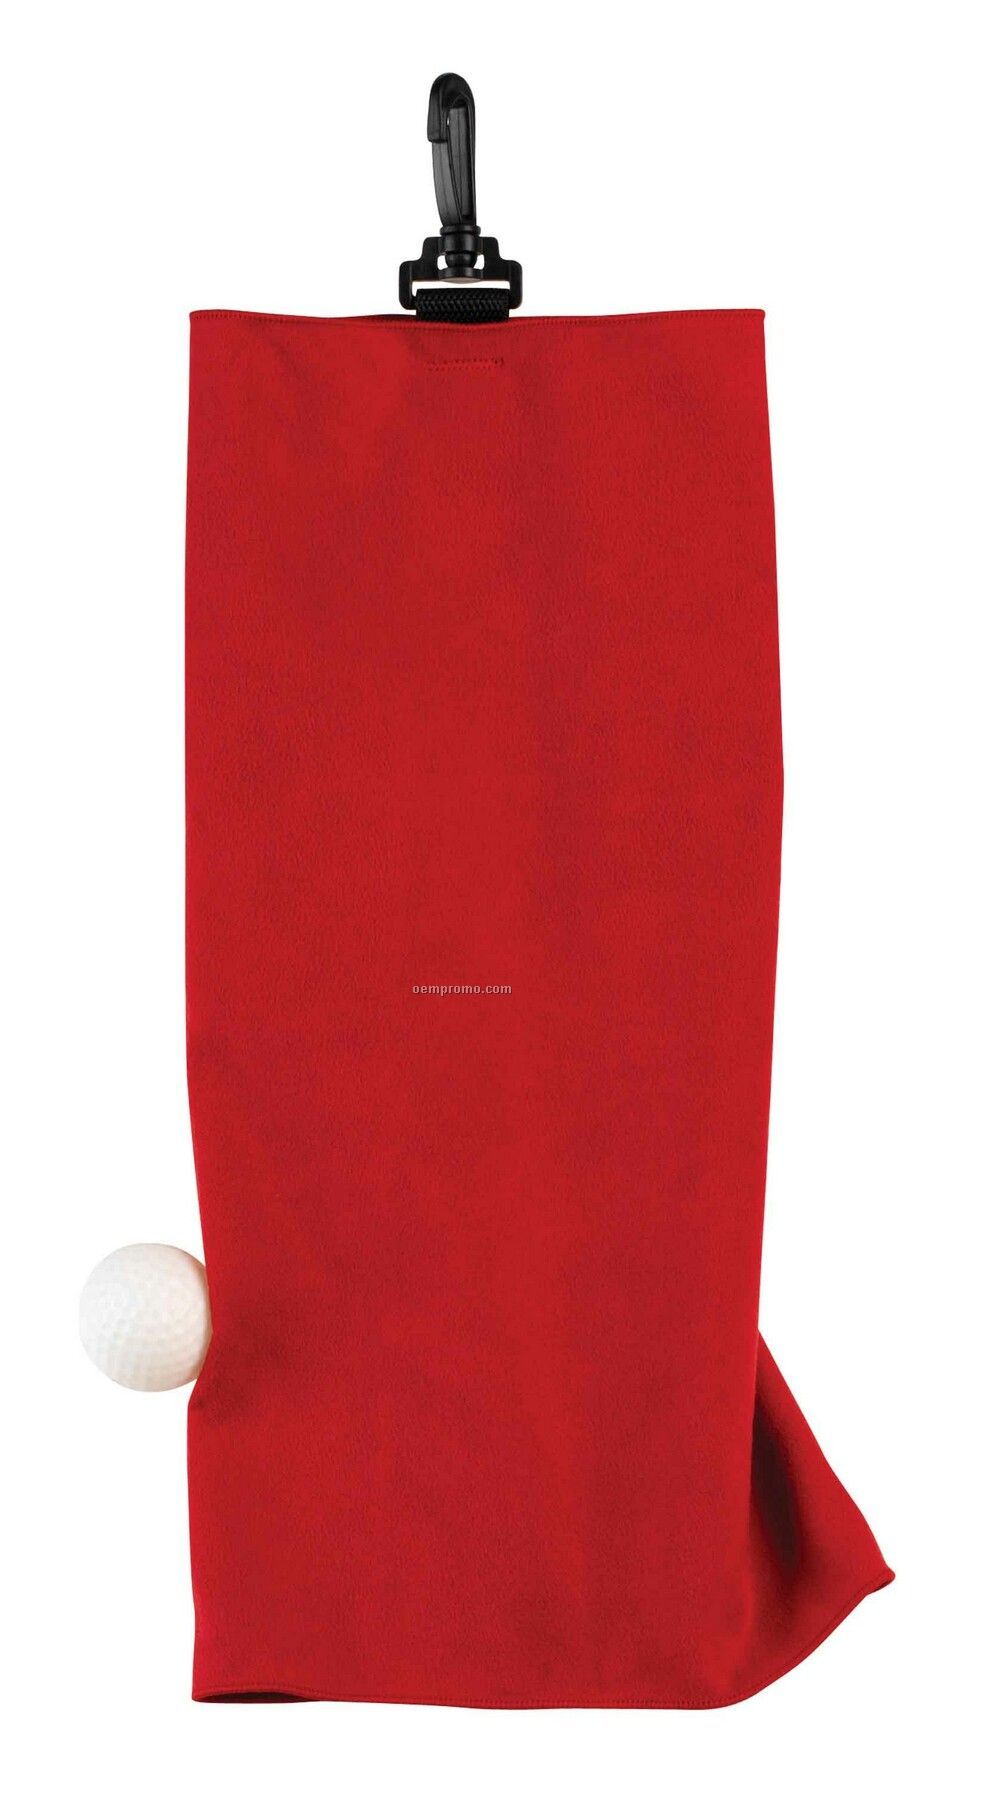 The First Tee Dri-lite Golf Towel